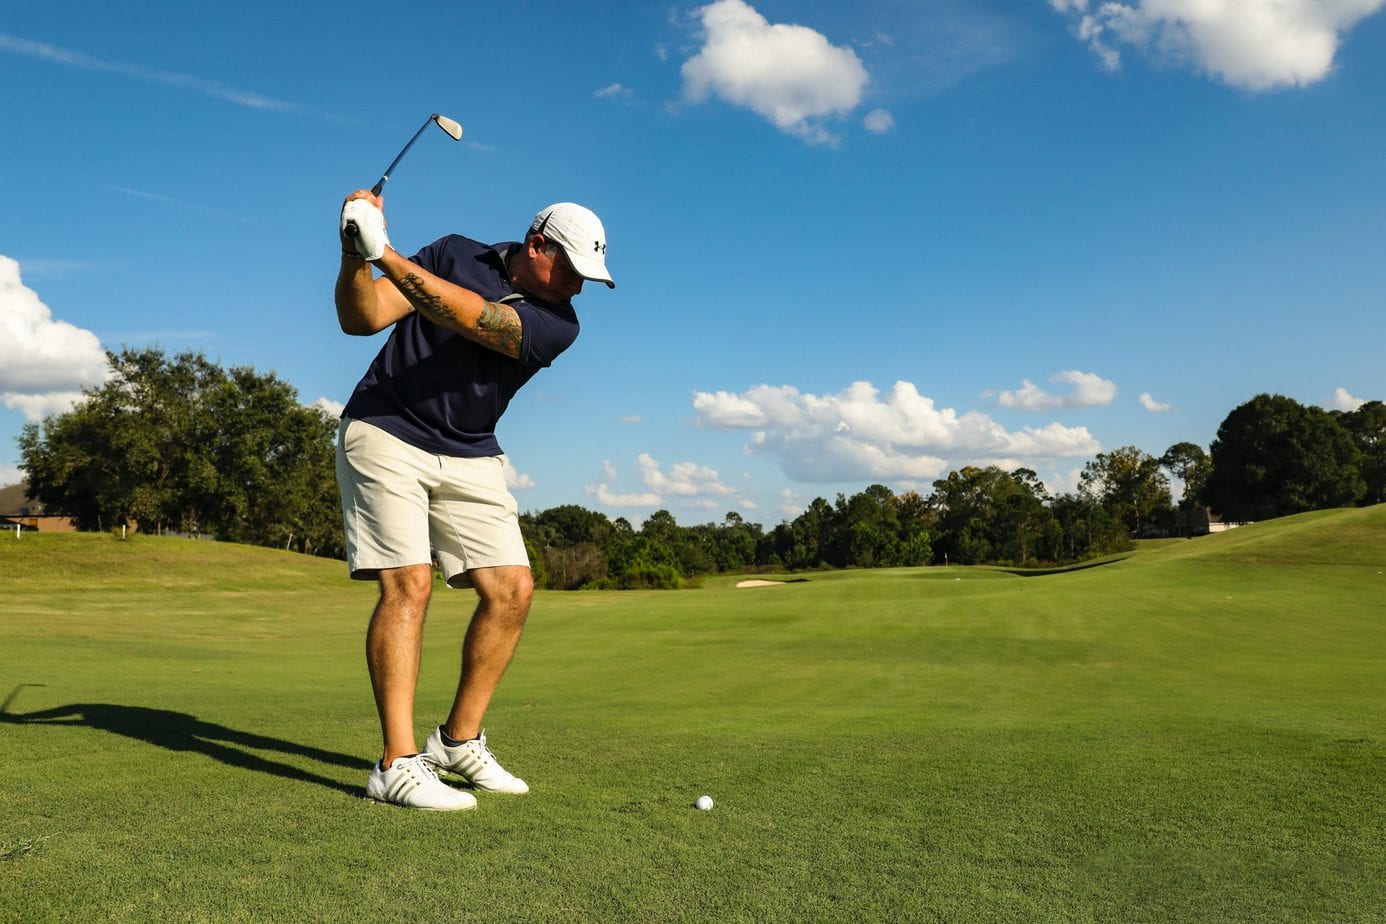 Basic types of strokes in golf